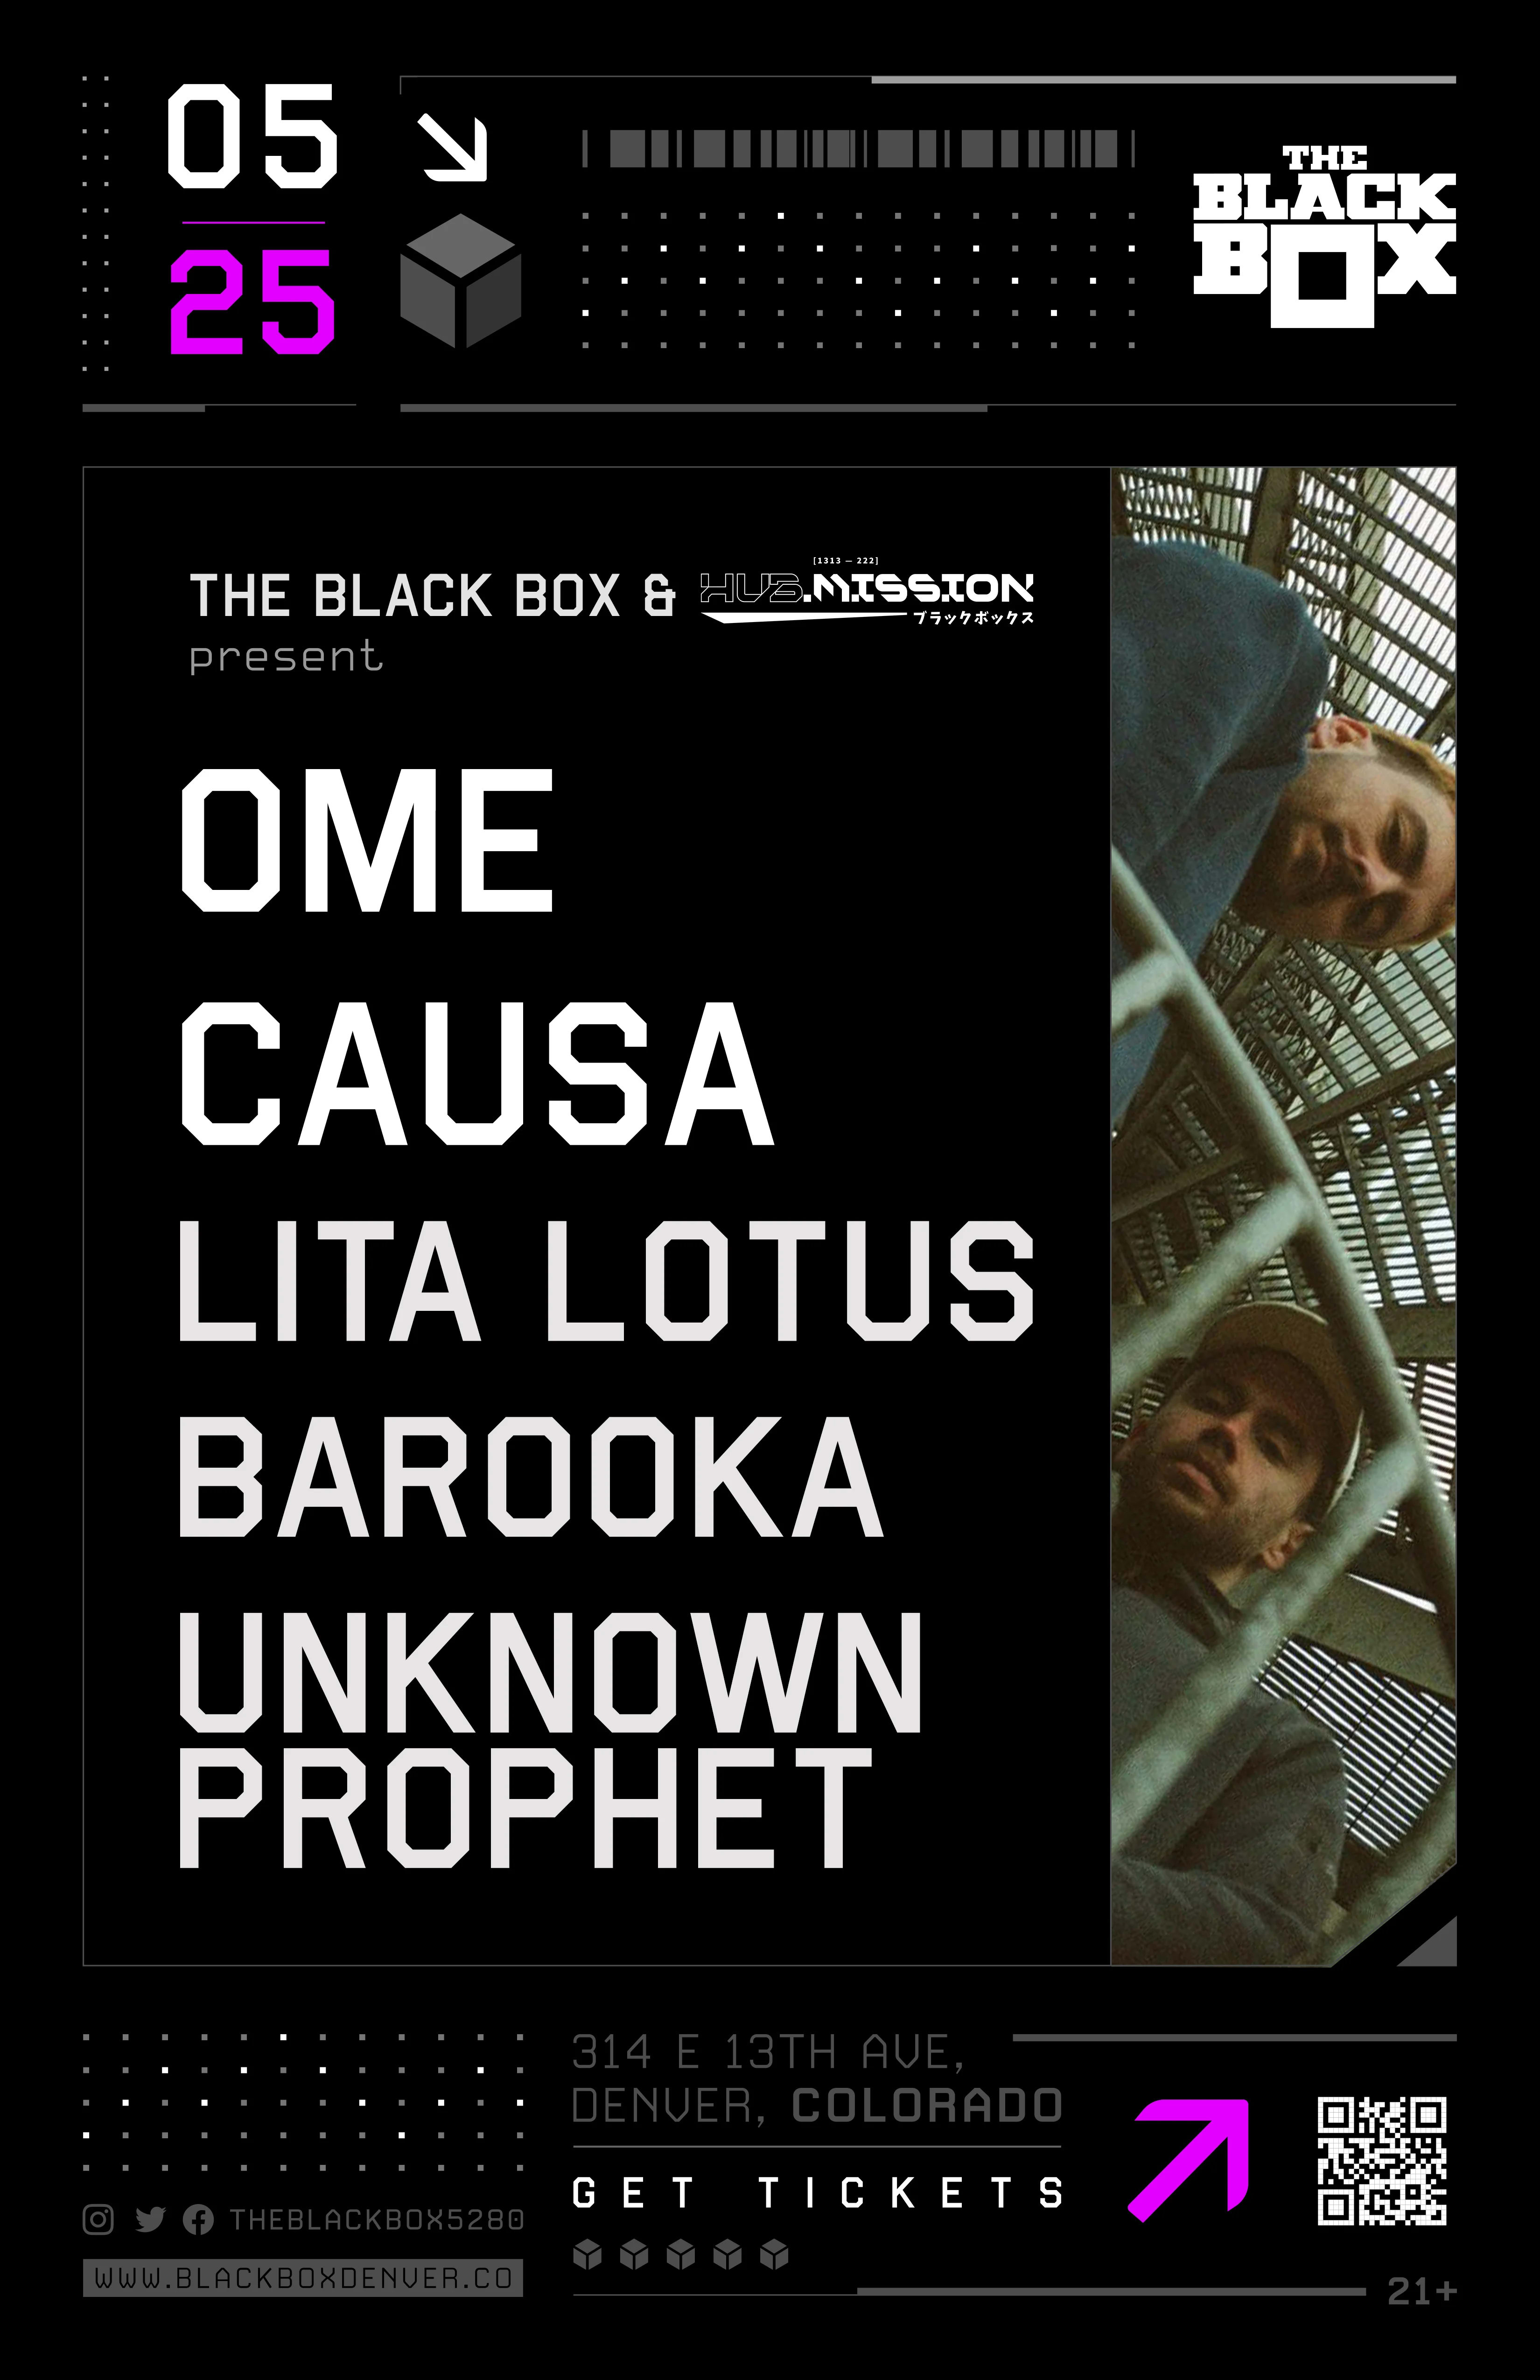 The Black Box & Hub.mission present: Ome, Causa, Lita Lotus, Barooka, Unknown Prophet